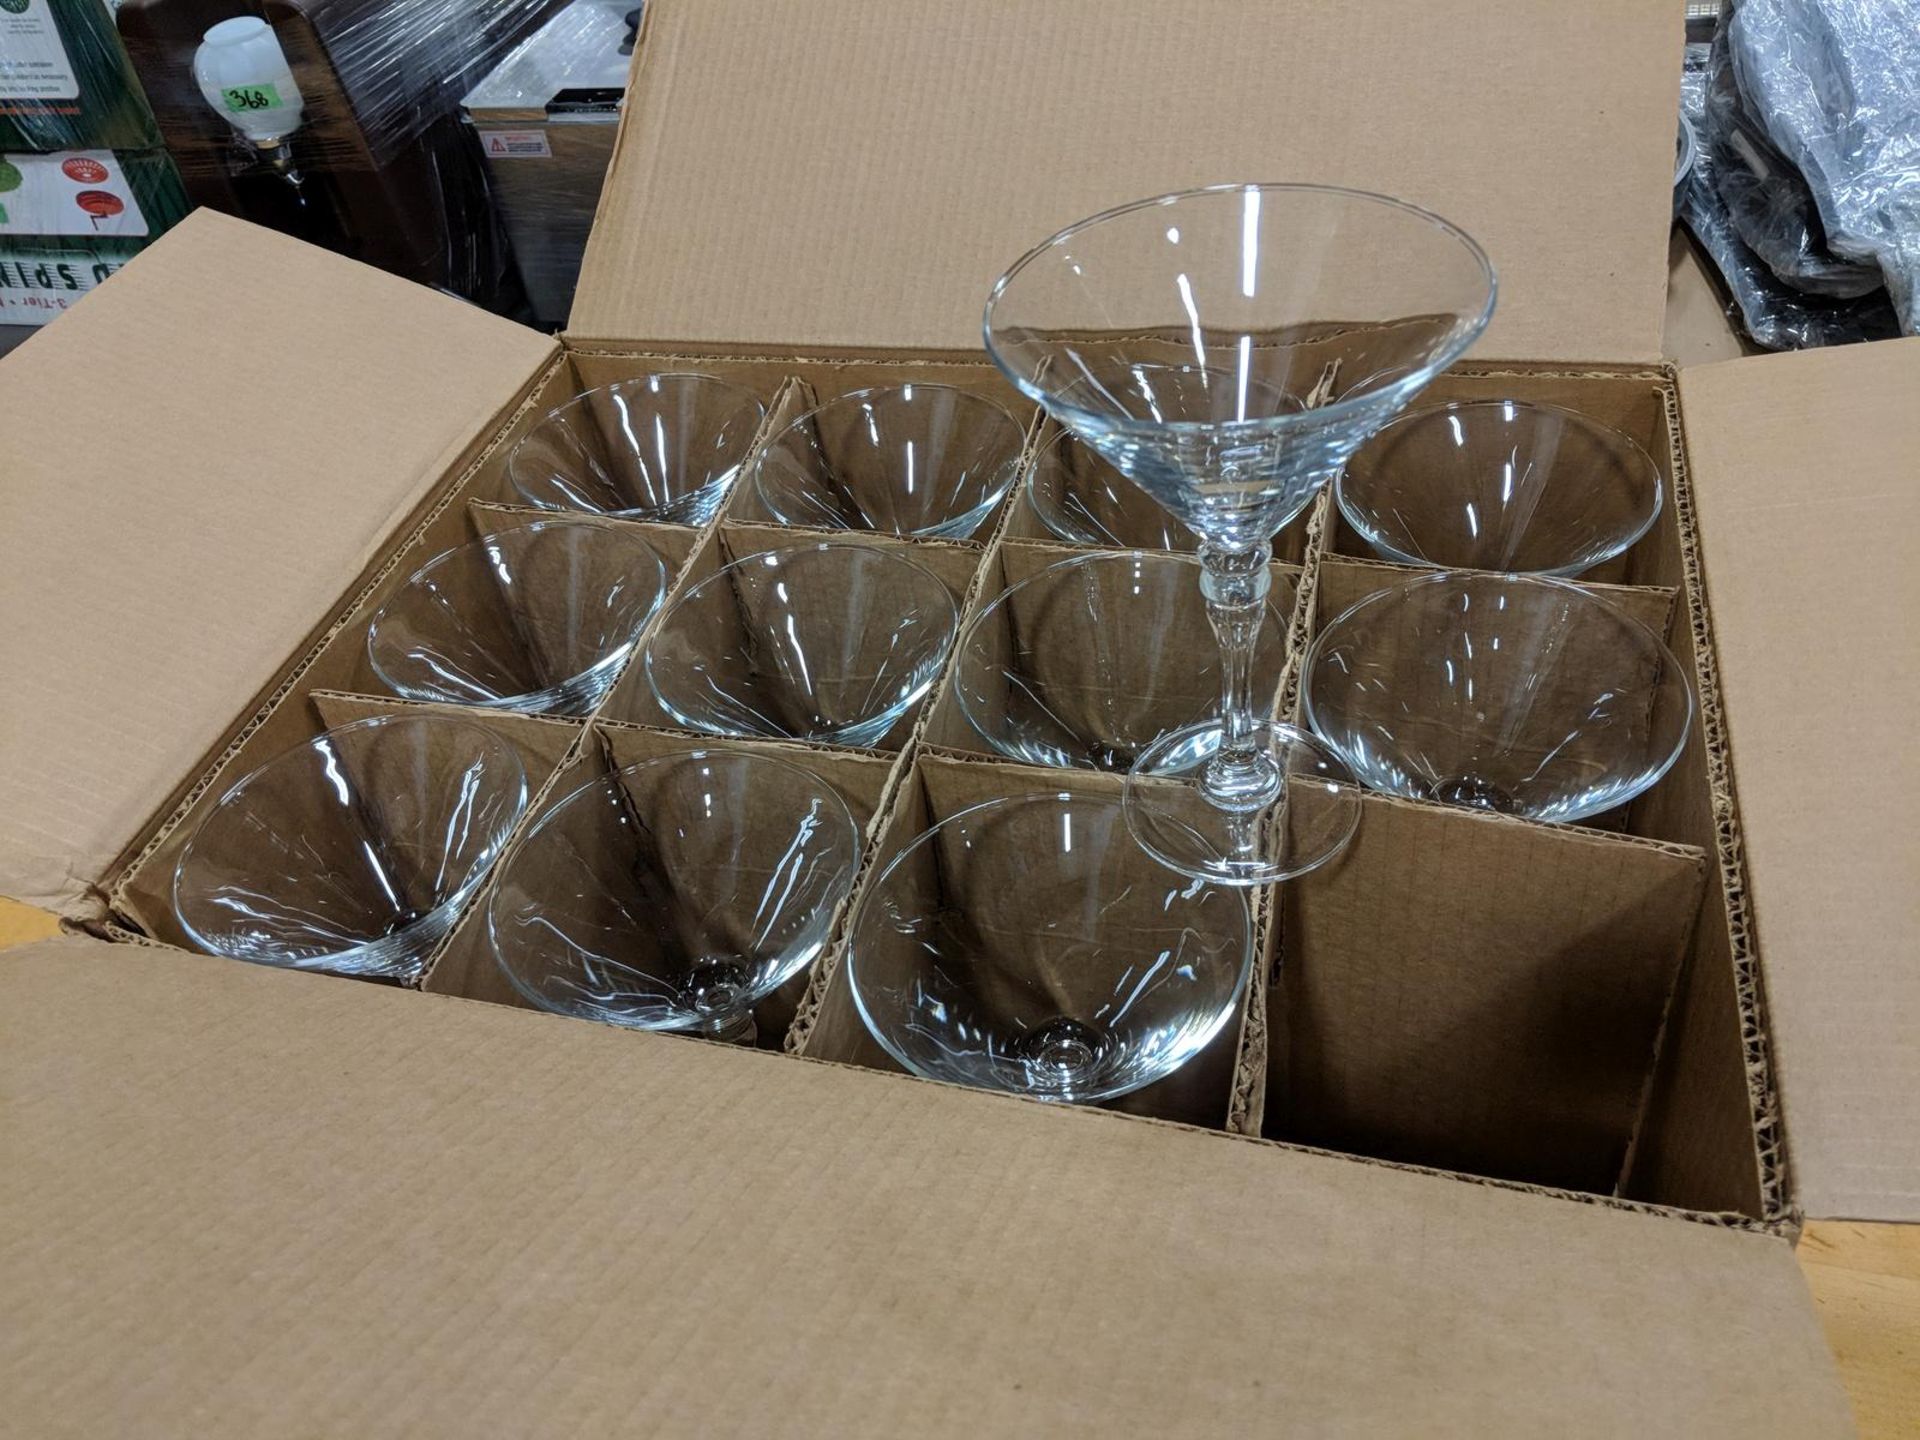 7.5oz/220ml Sienna Cocktail Glasses - Lot of 12 (1 Case), Arcoroc 54850